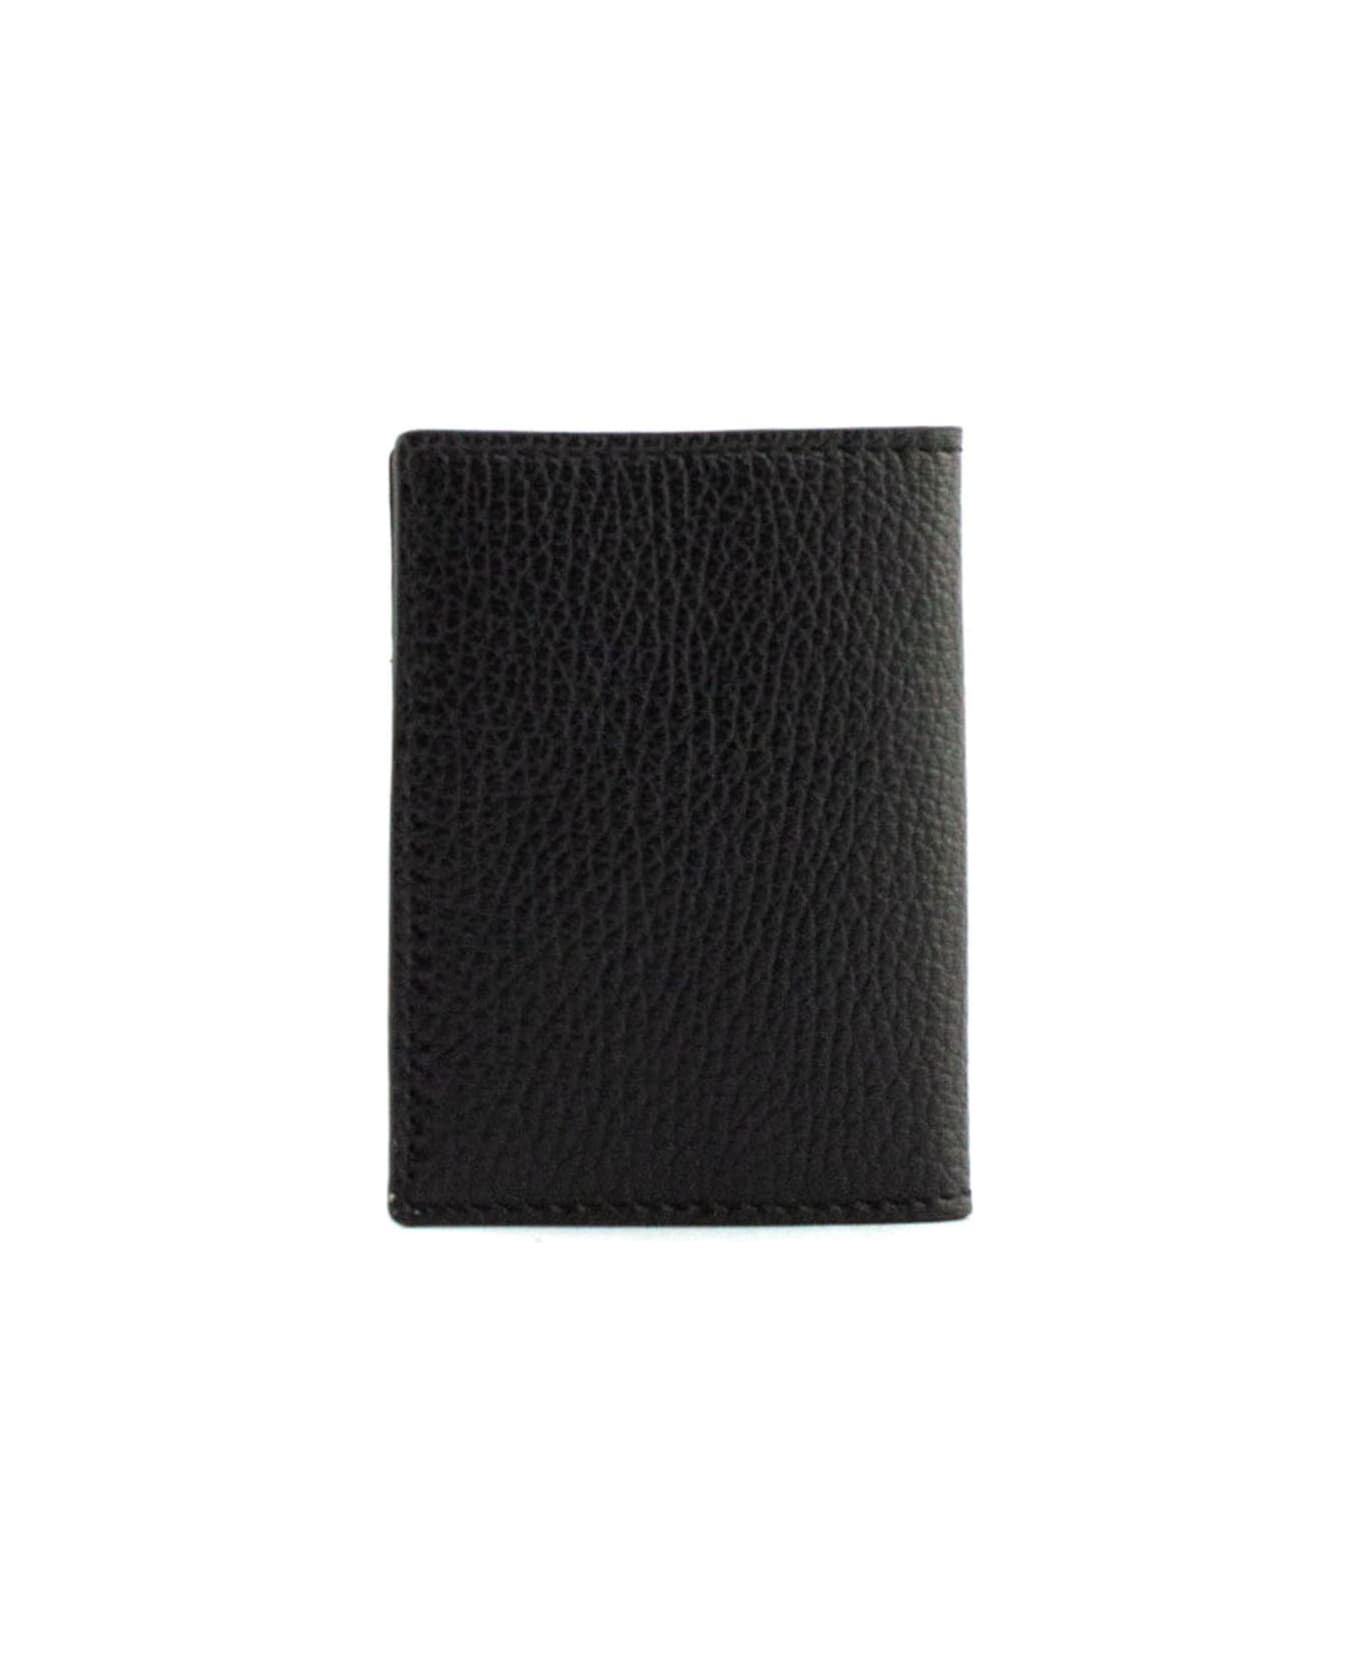 Avenue 67 Black Leather Card Holder - Black クラッチバッグ